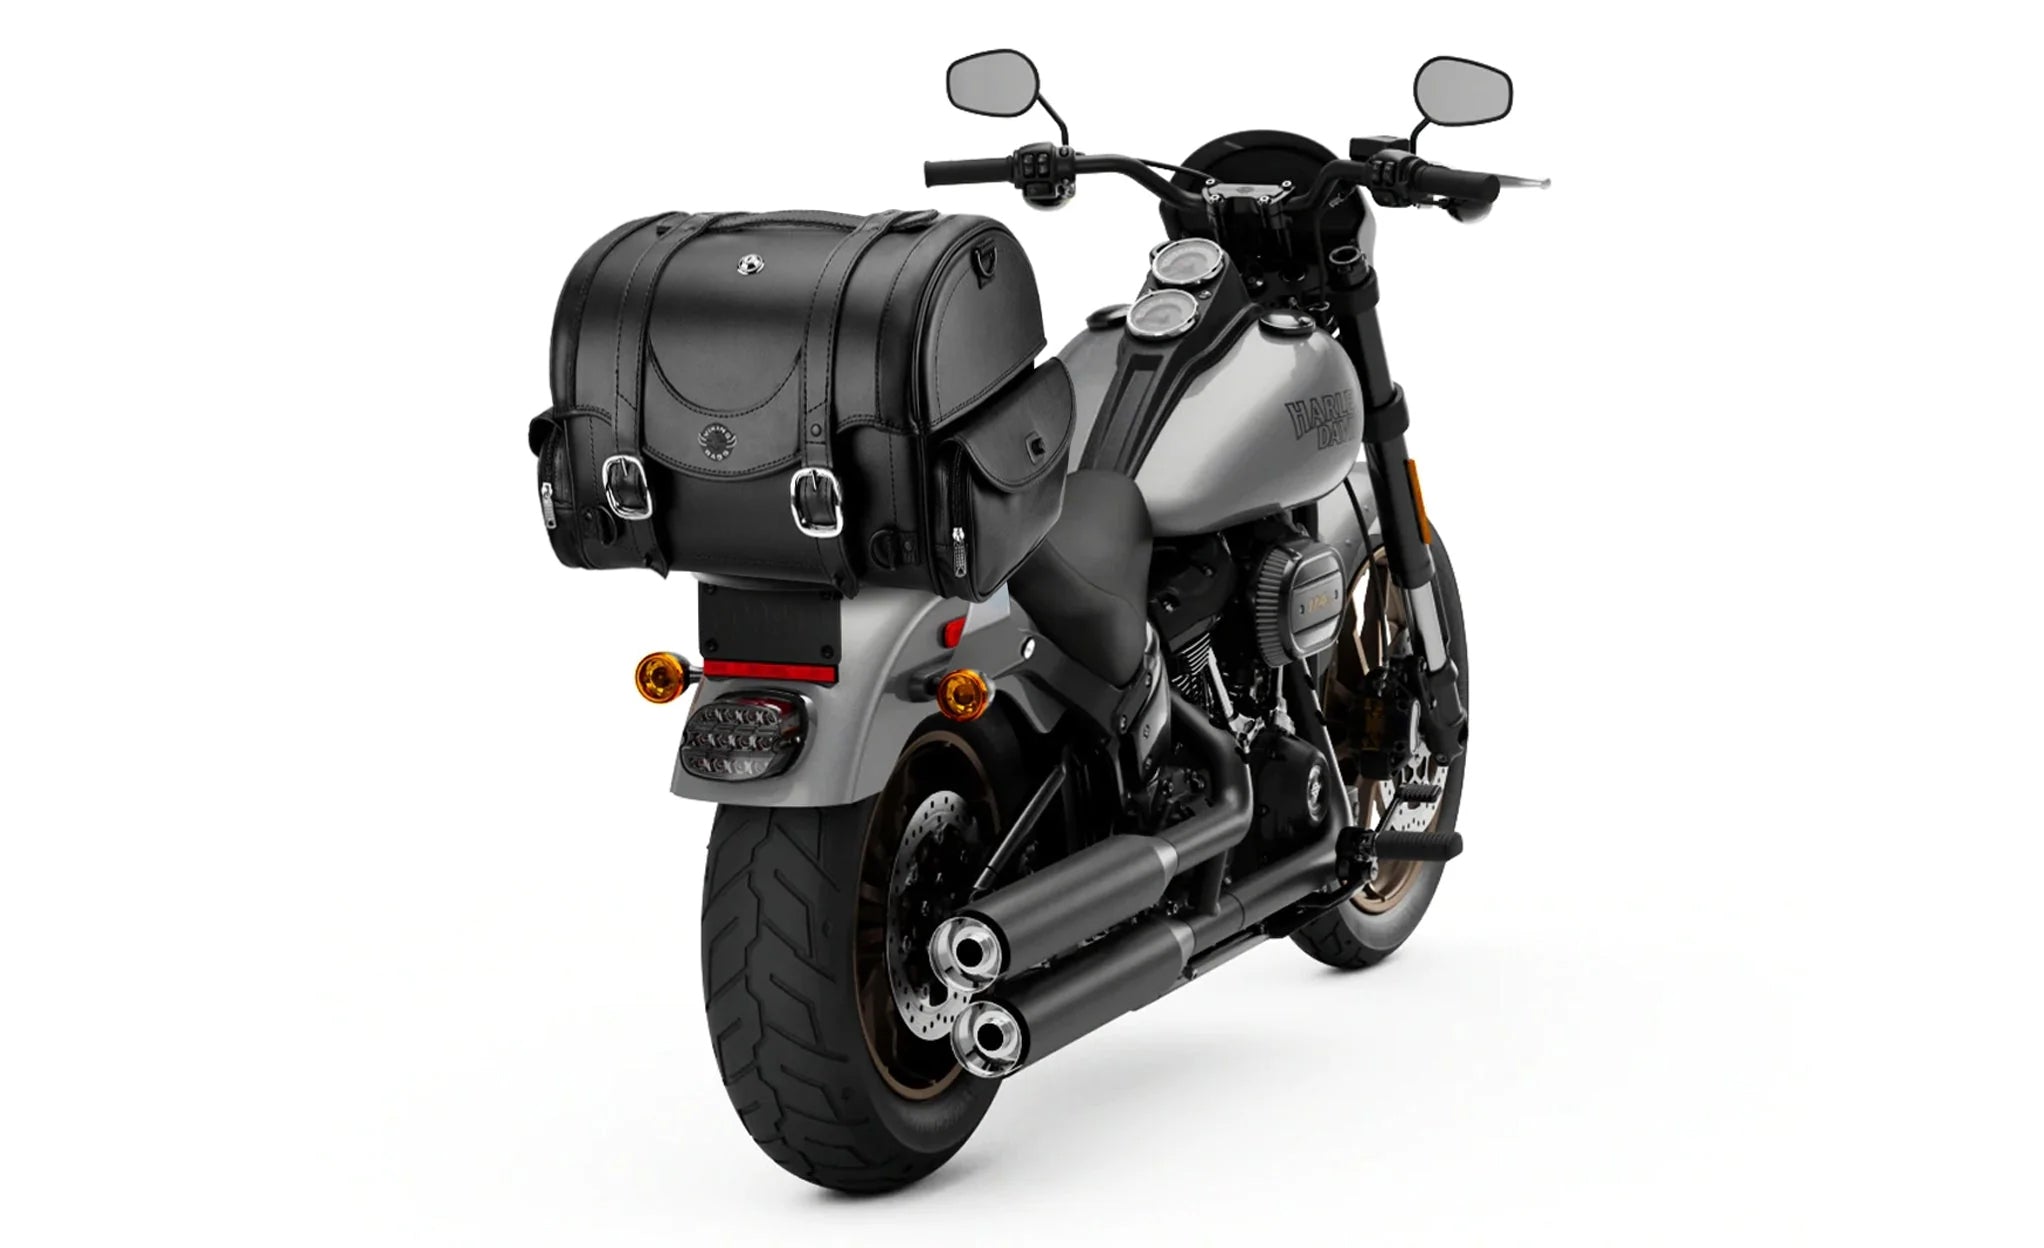 21L - Century Medium Kawasaki Leather Motorcycle Sissy Bar Bag on Bike Photo @expand